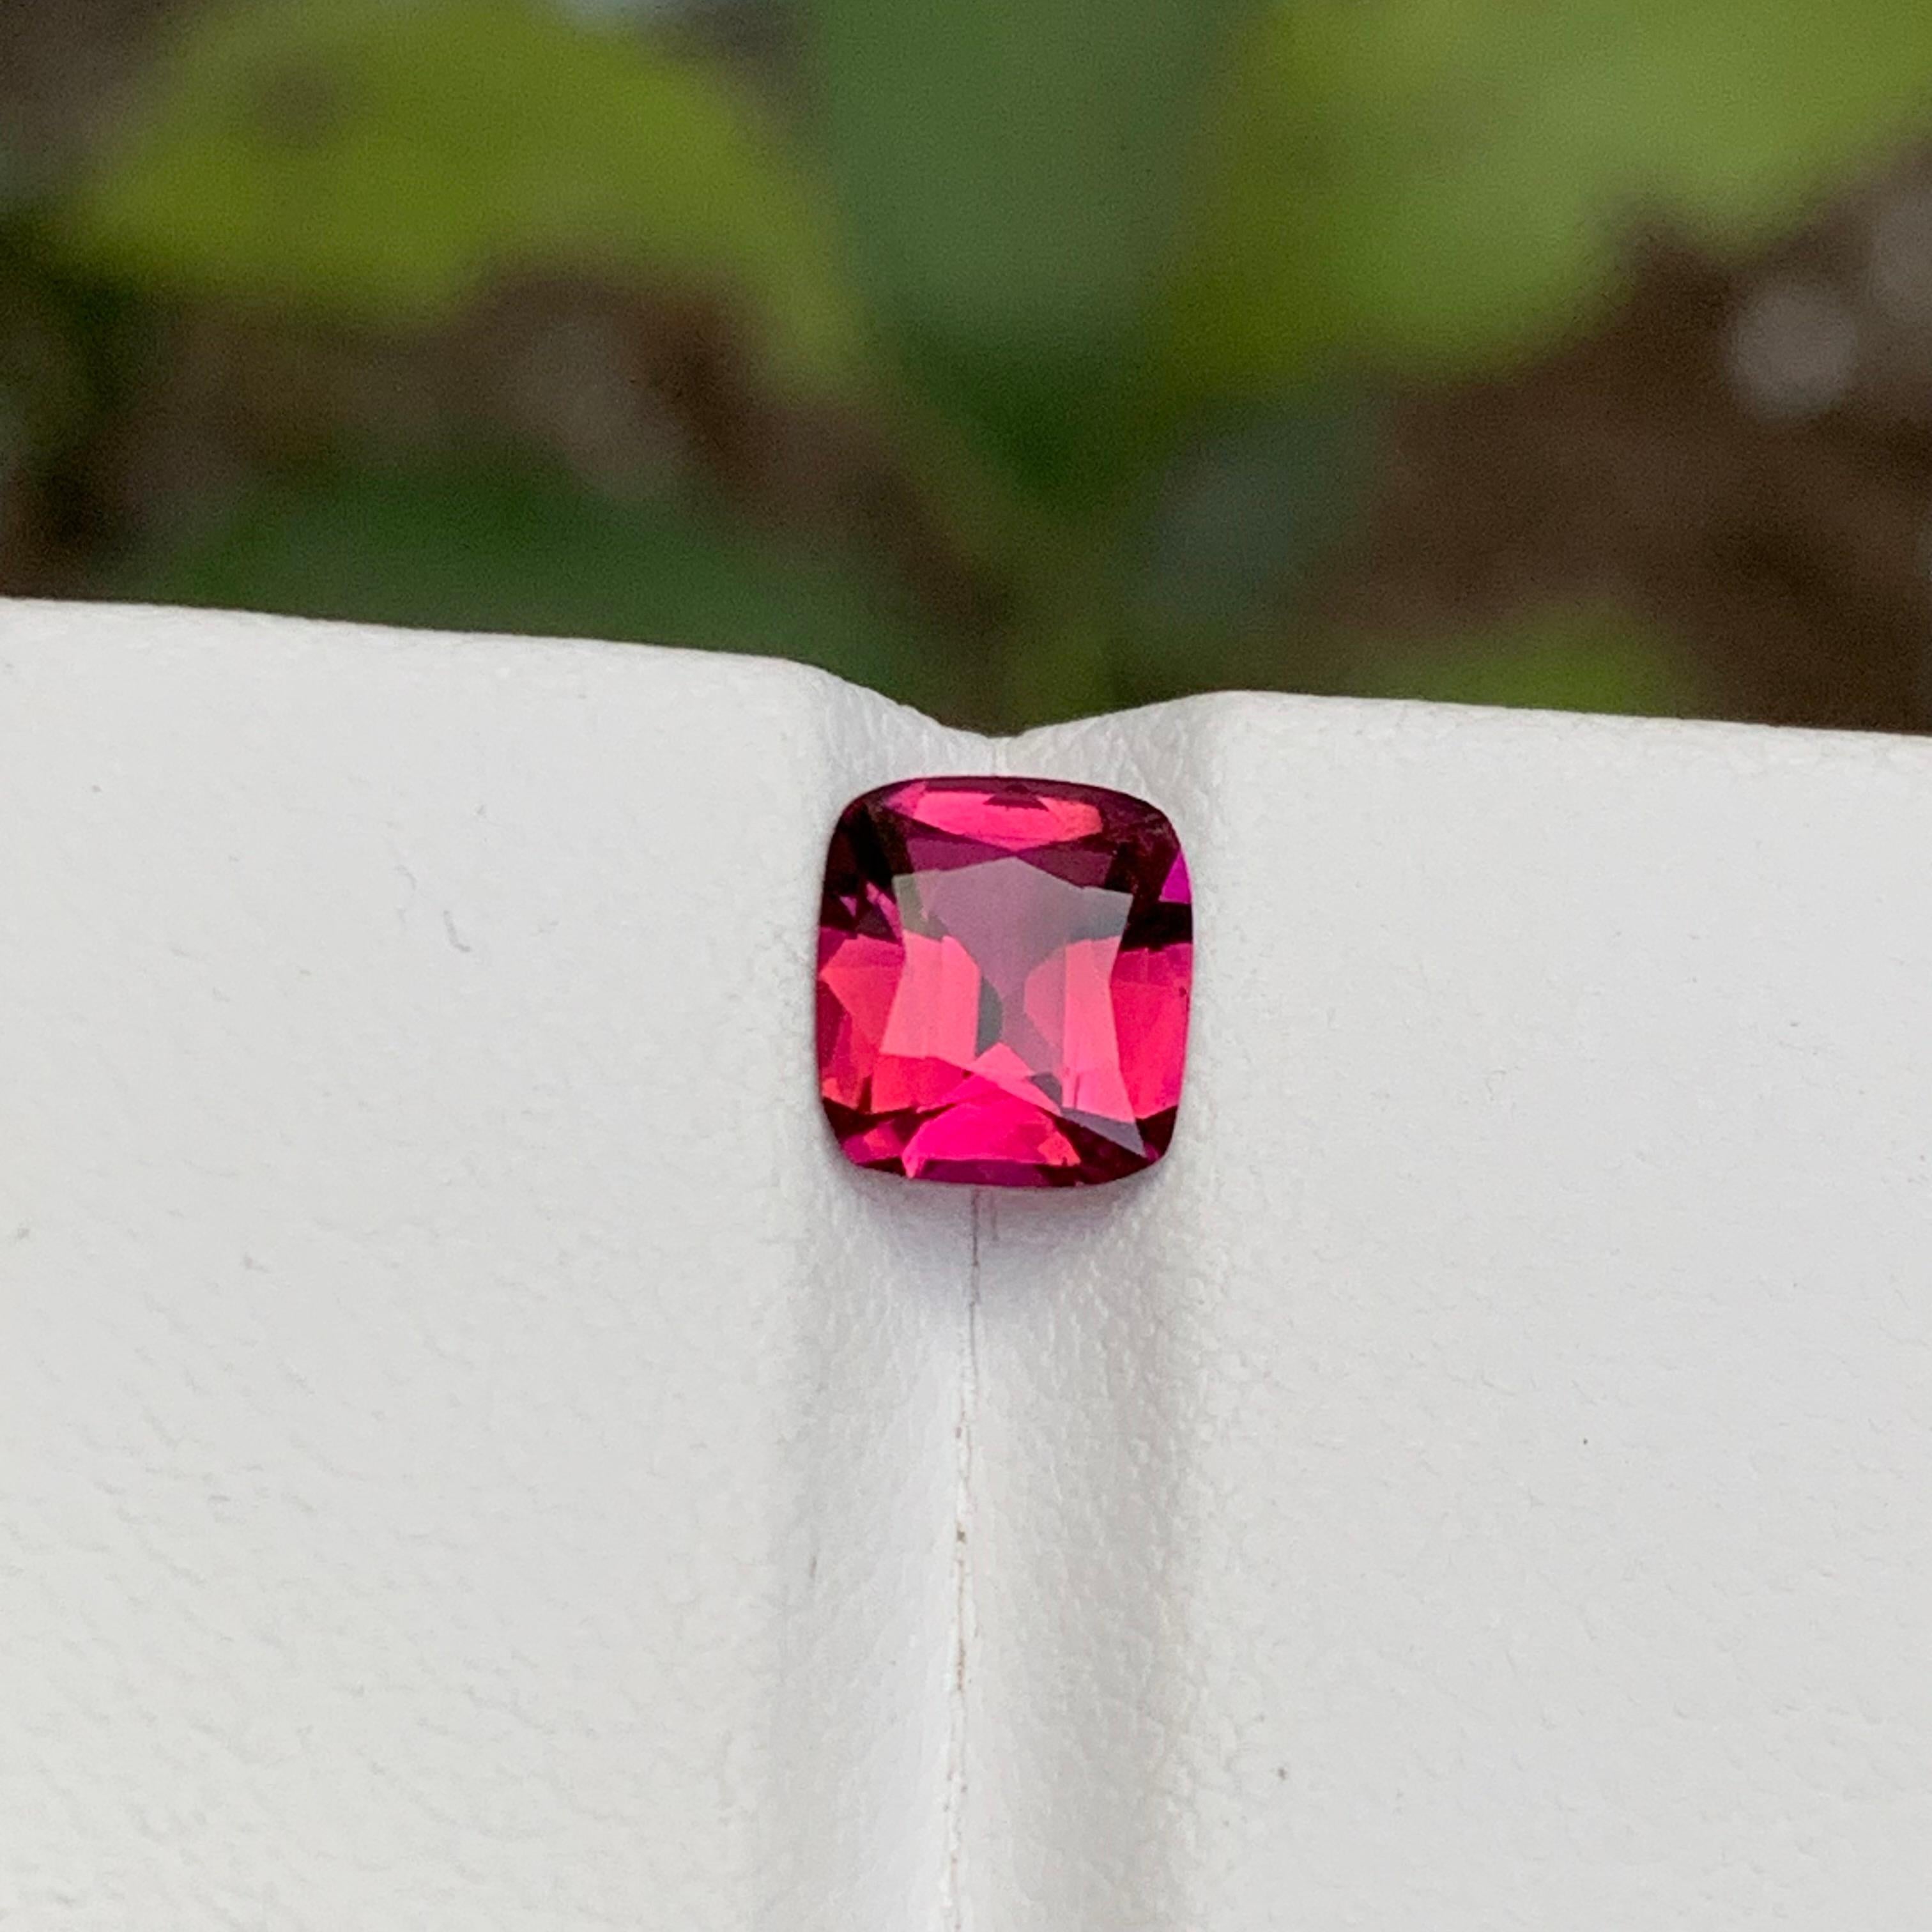 Rare Reddish Pink Rubellite Tourmaline Gemstone, 1.20 Ct Cushion Cut for Ring For Sale 7